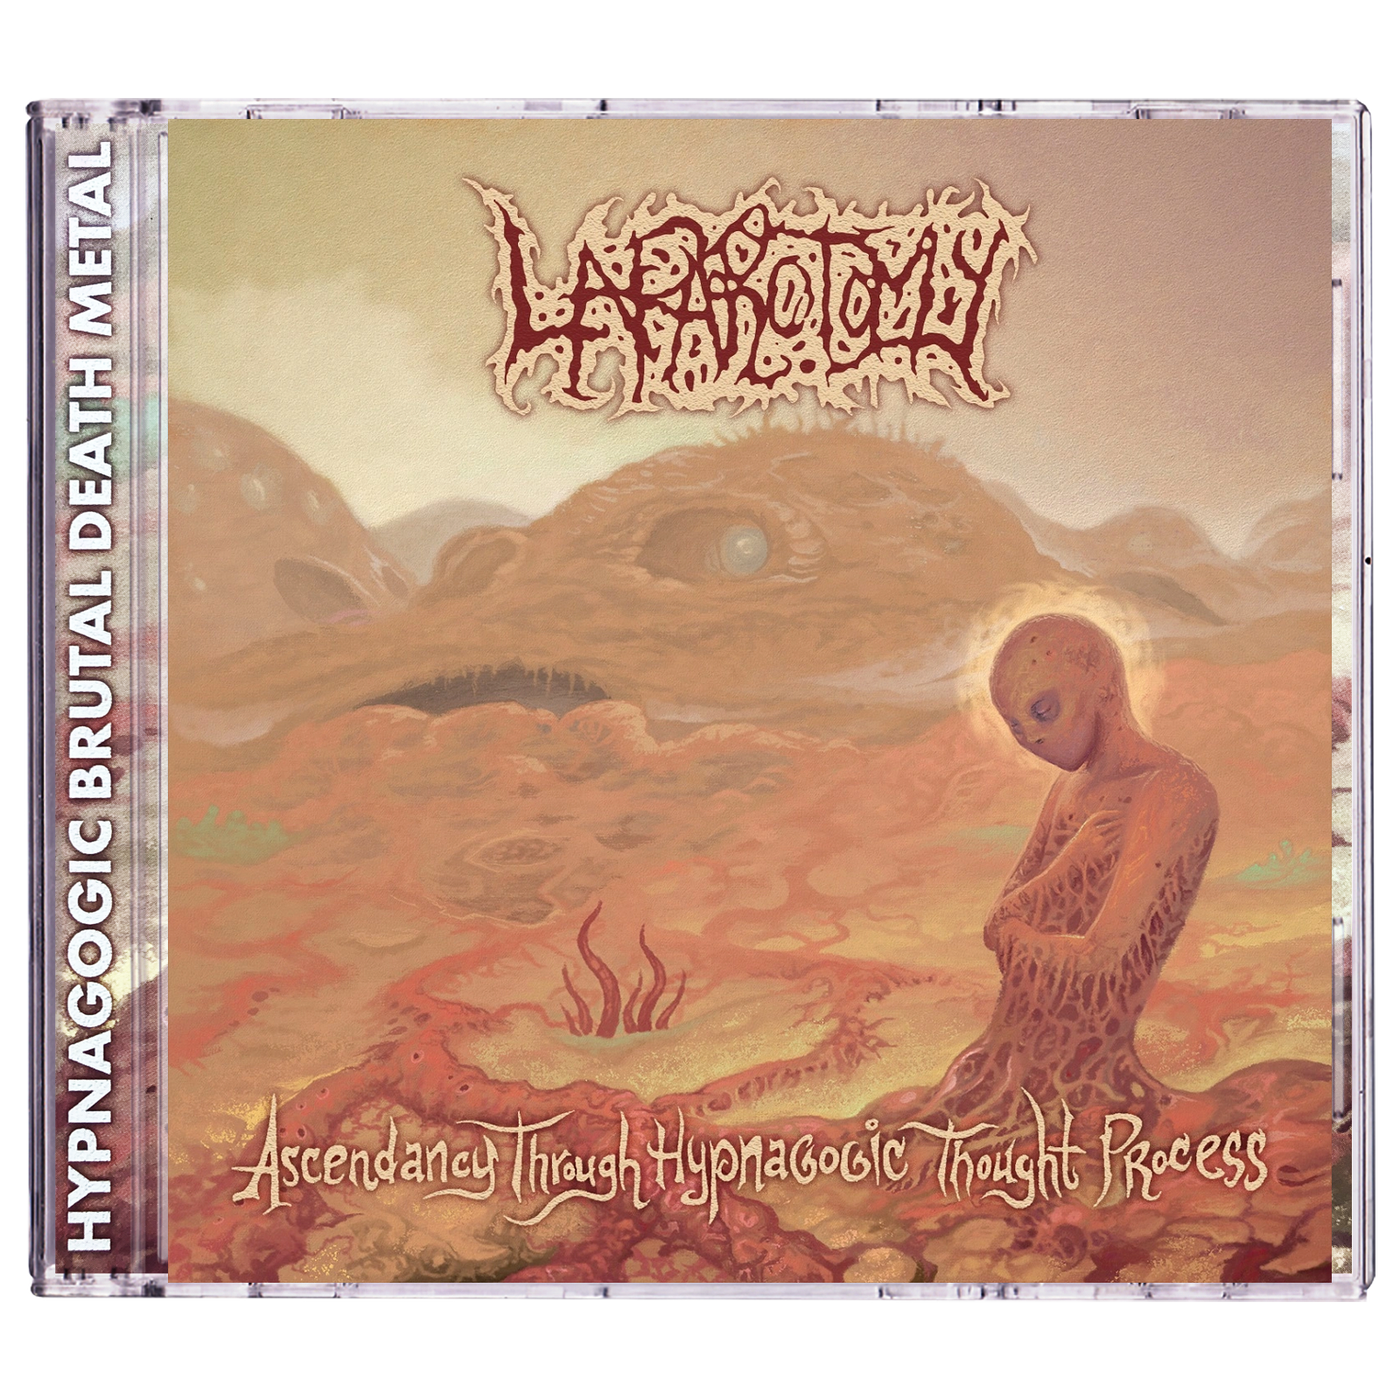 Laparotomy 'Ascendancy Through Hypnagogic Thought Process' CD